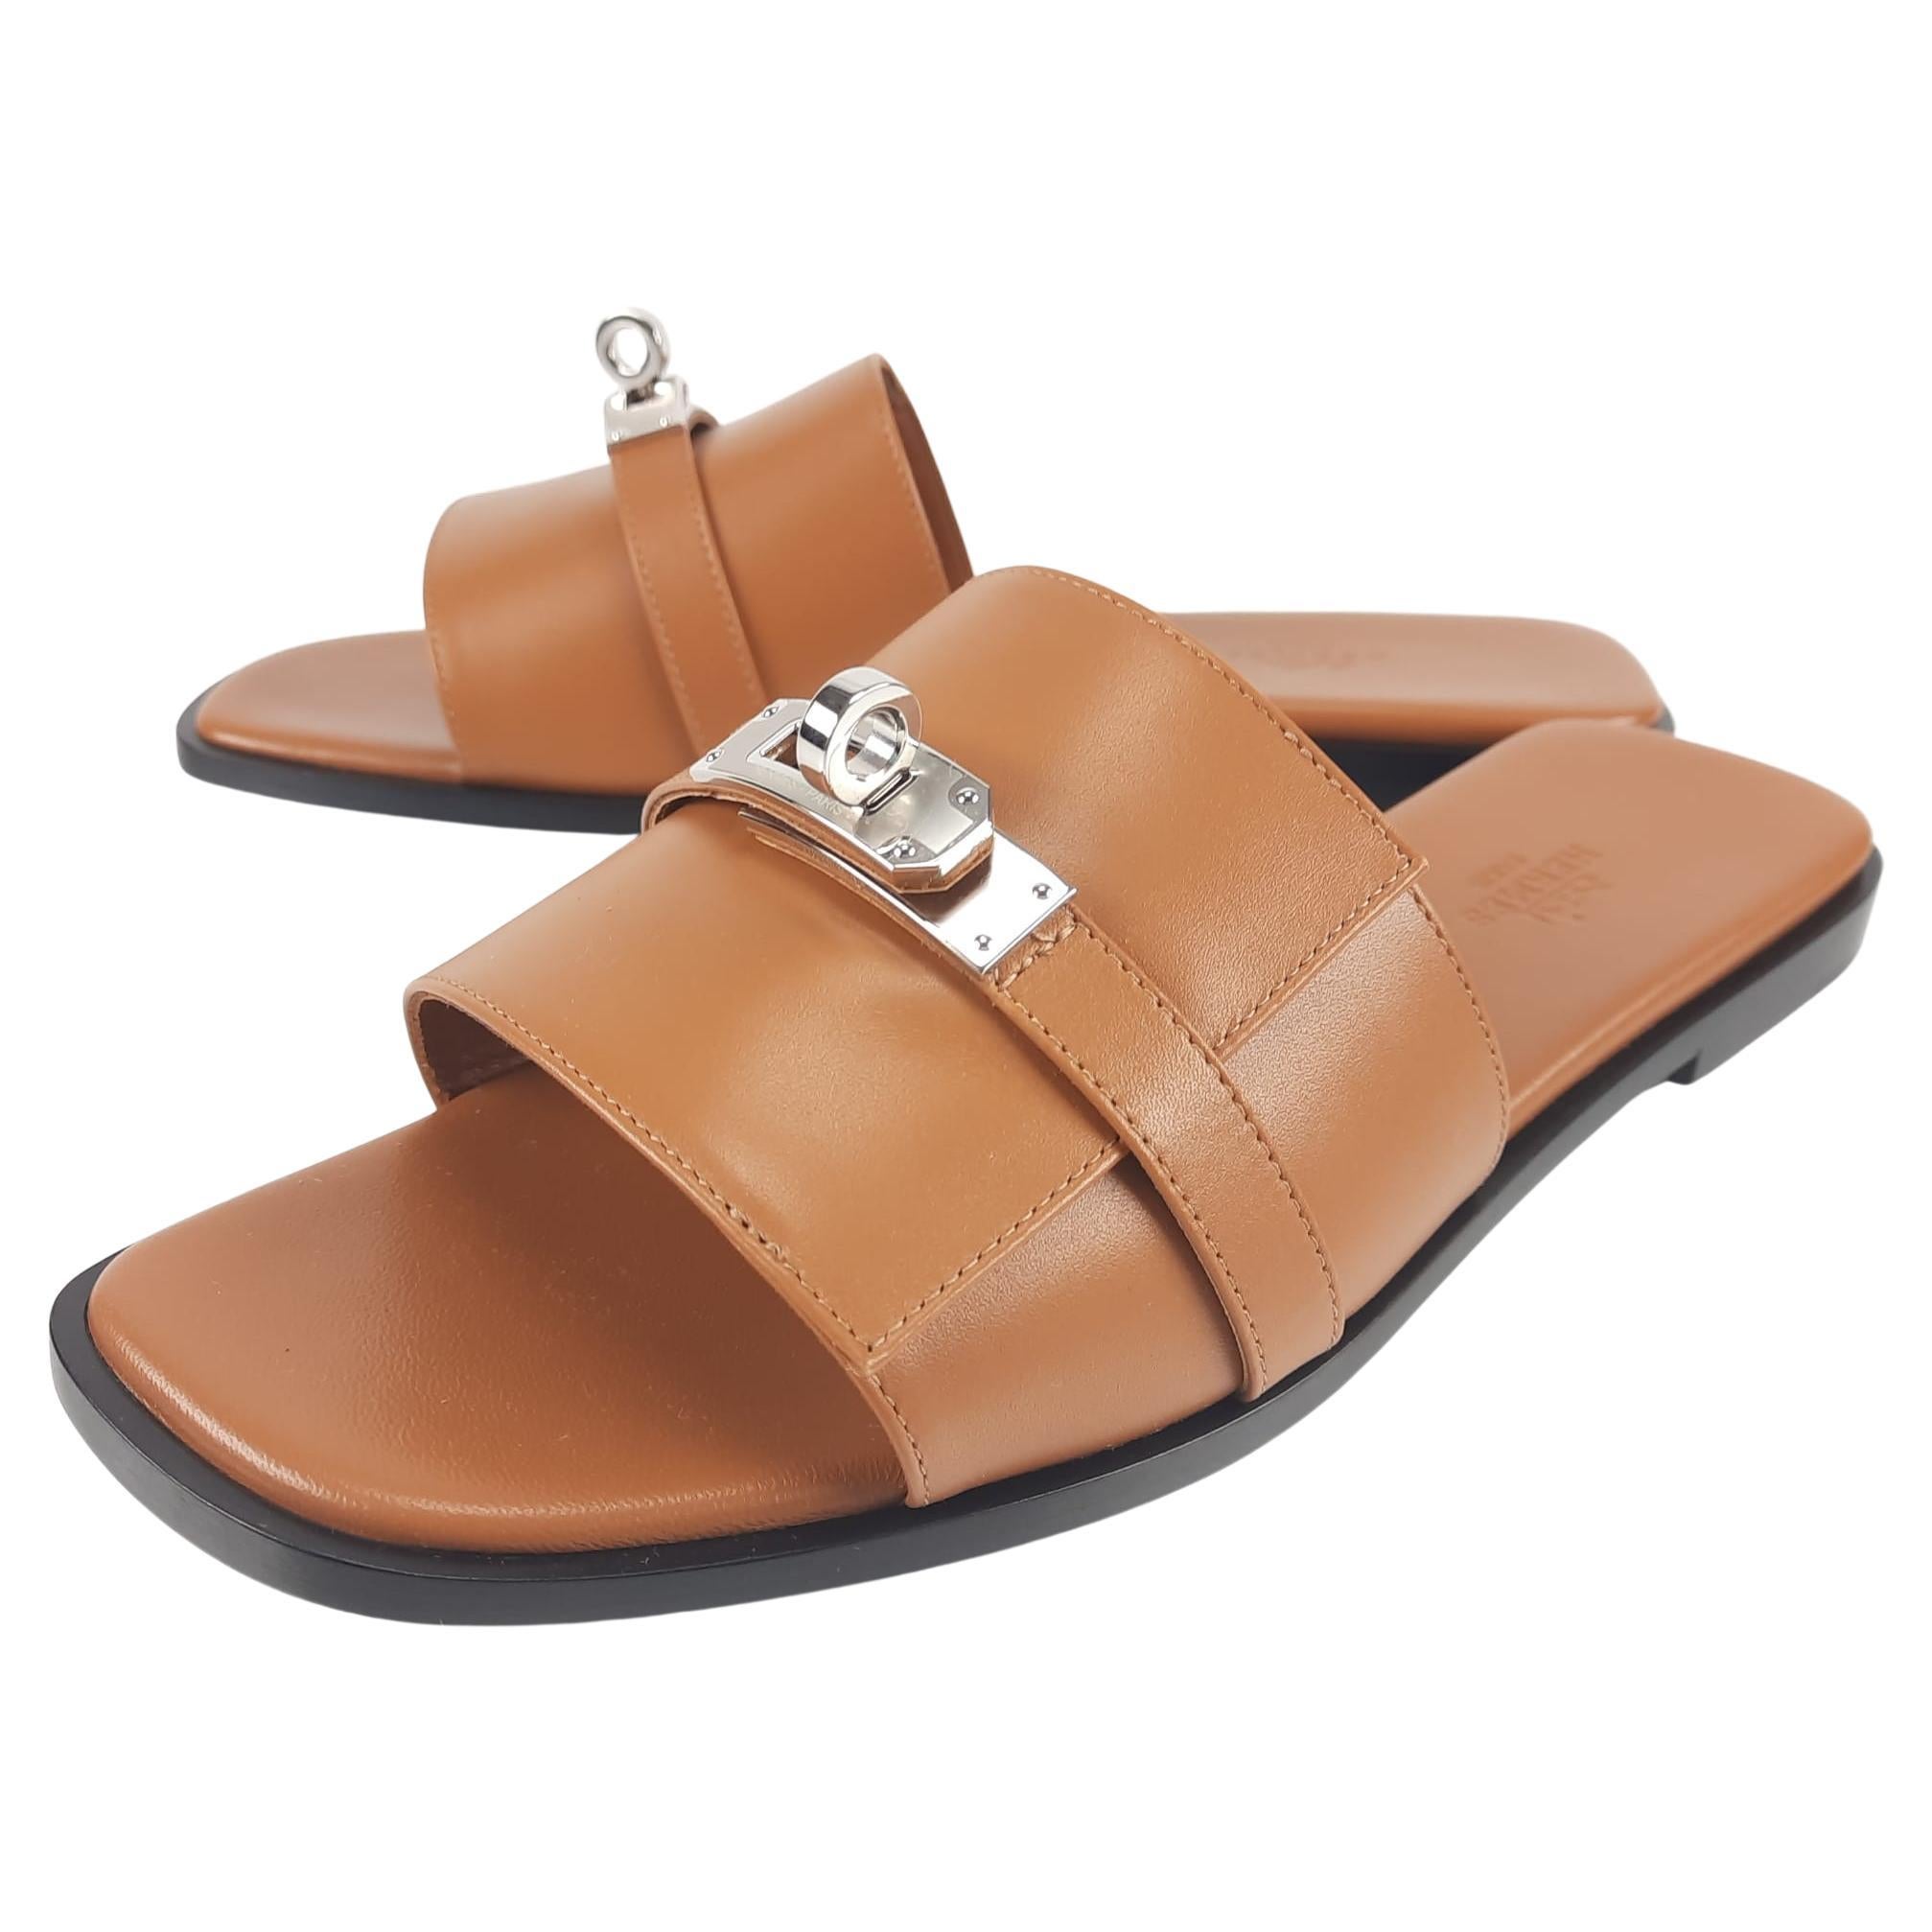 Sz36.5 brand new hermes Oran sandal in ostrich tangerine color